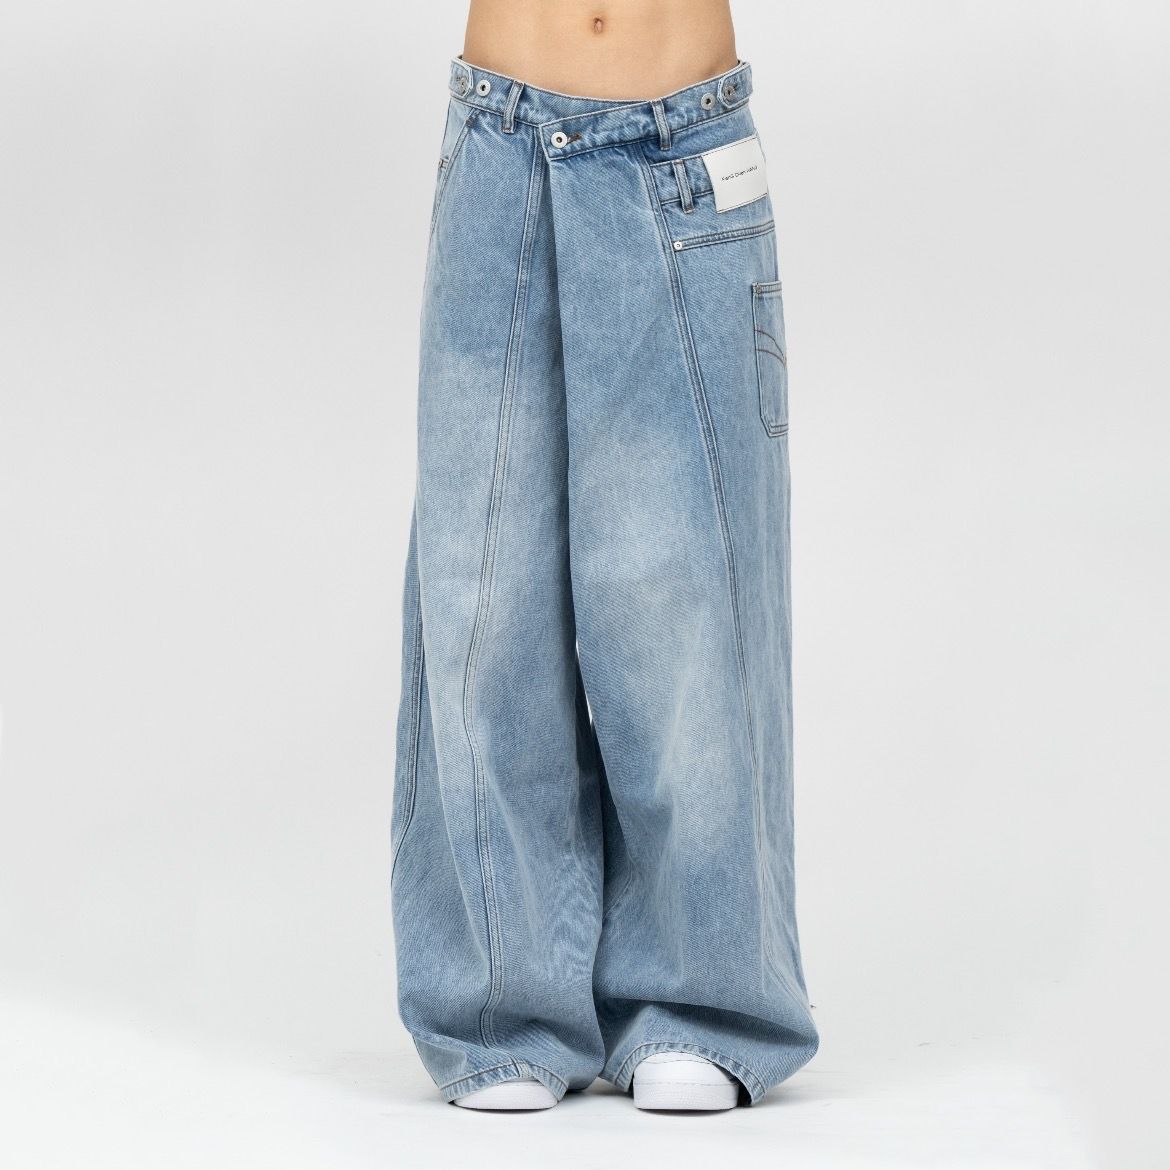 feng chen wang pleated denim jeans着用は10回未満です